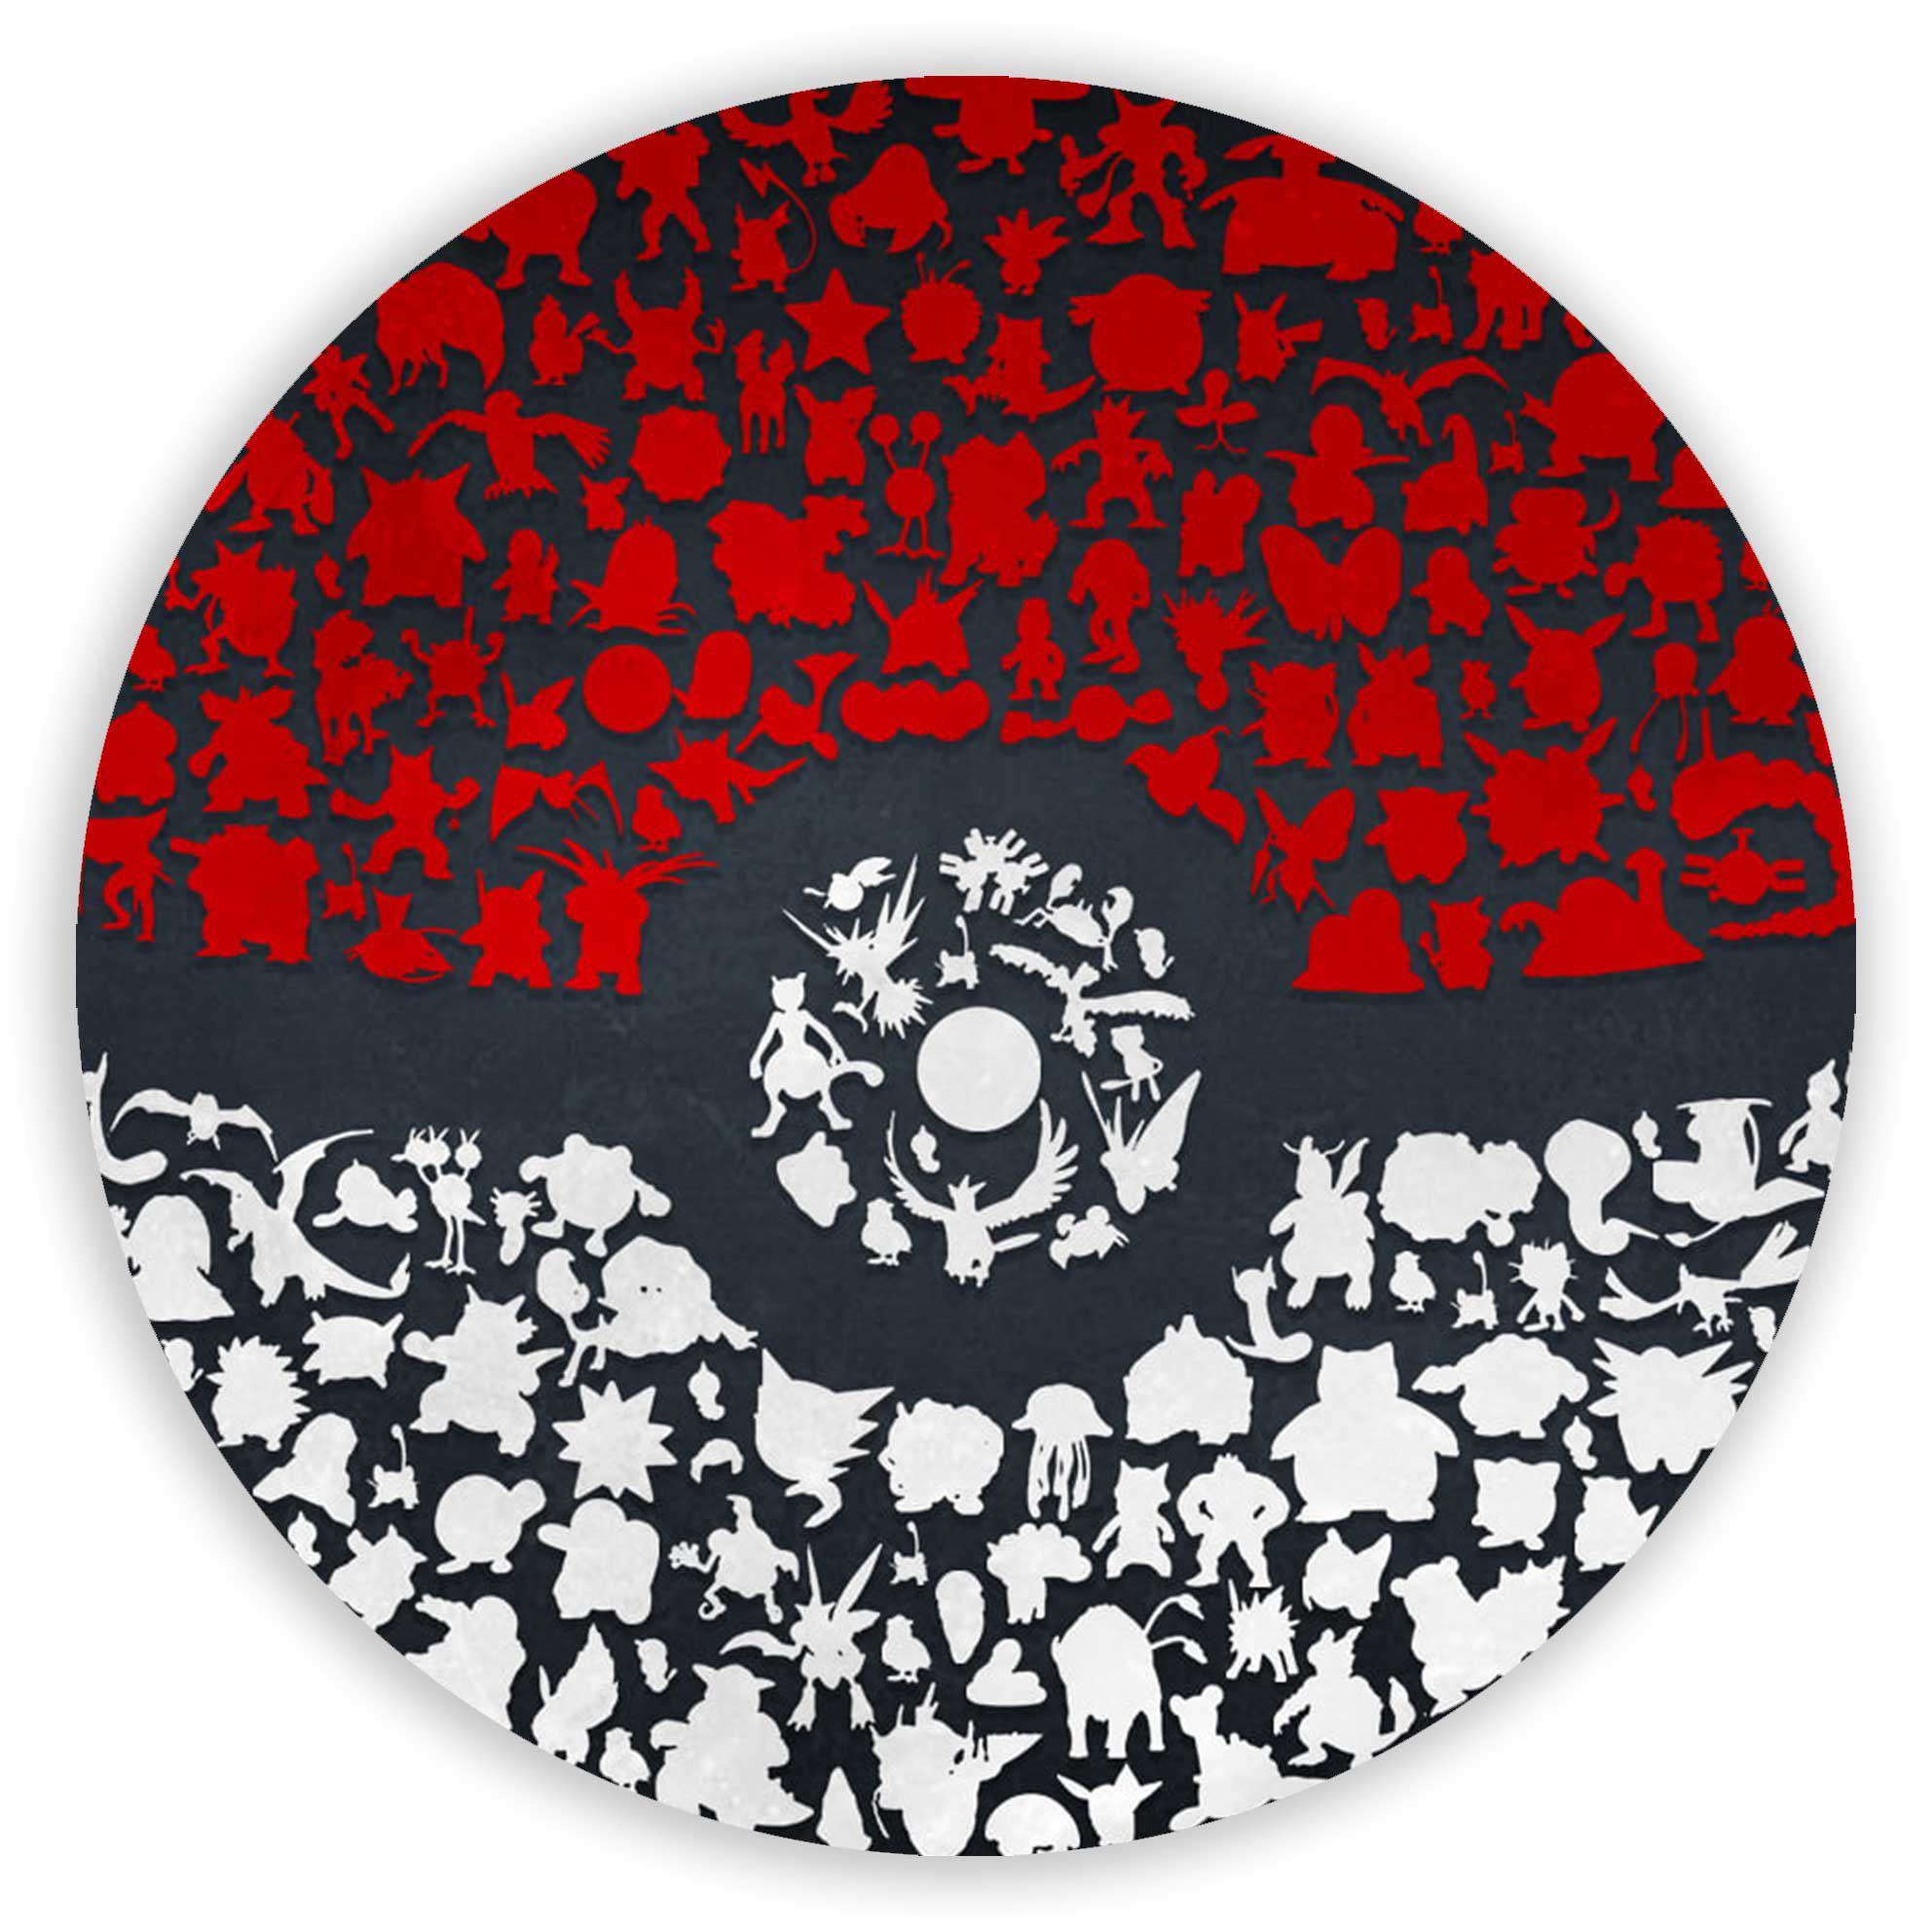 Painel Retangular - Pokemon - Sublimado 3D - Sublitex, painéis sublimados